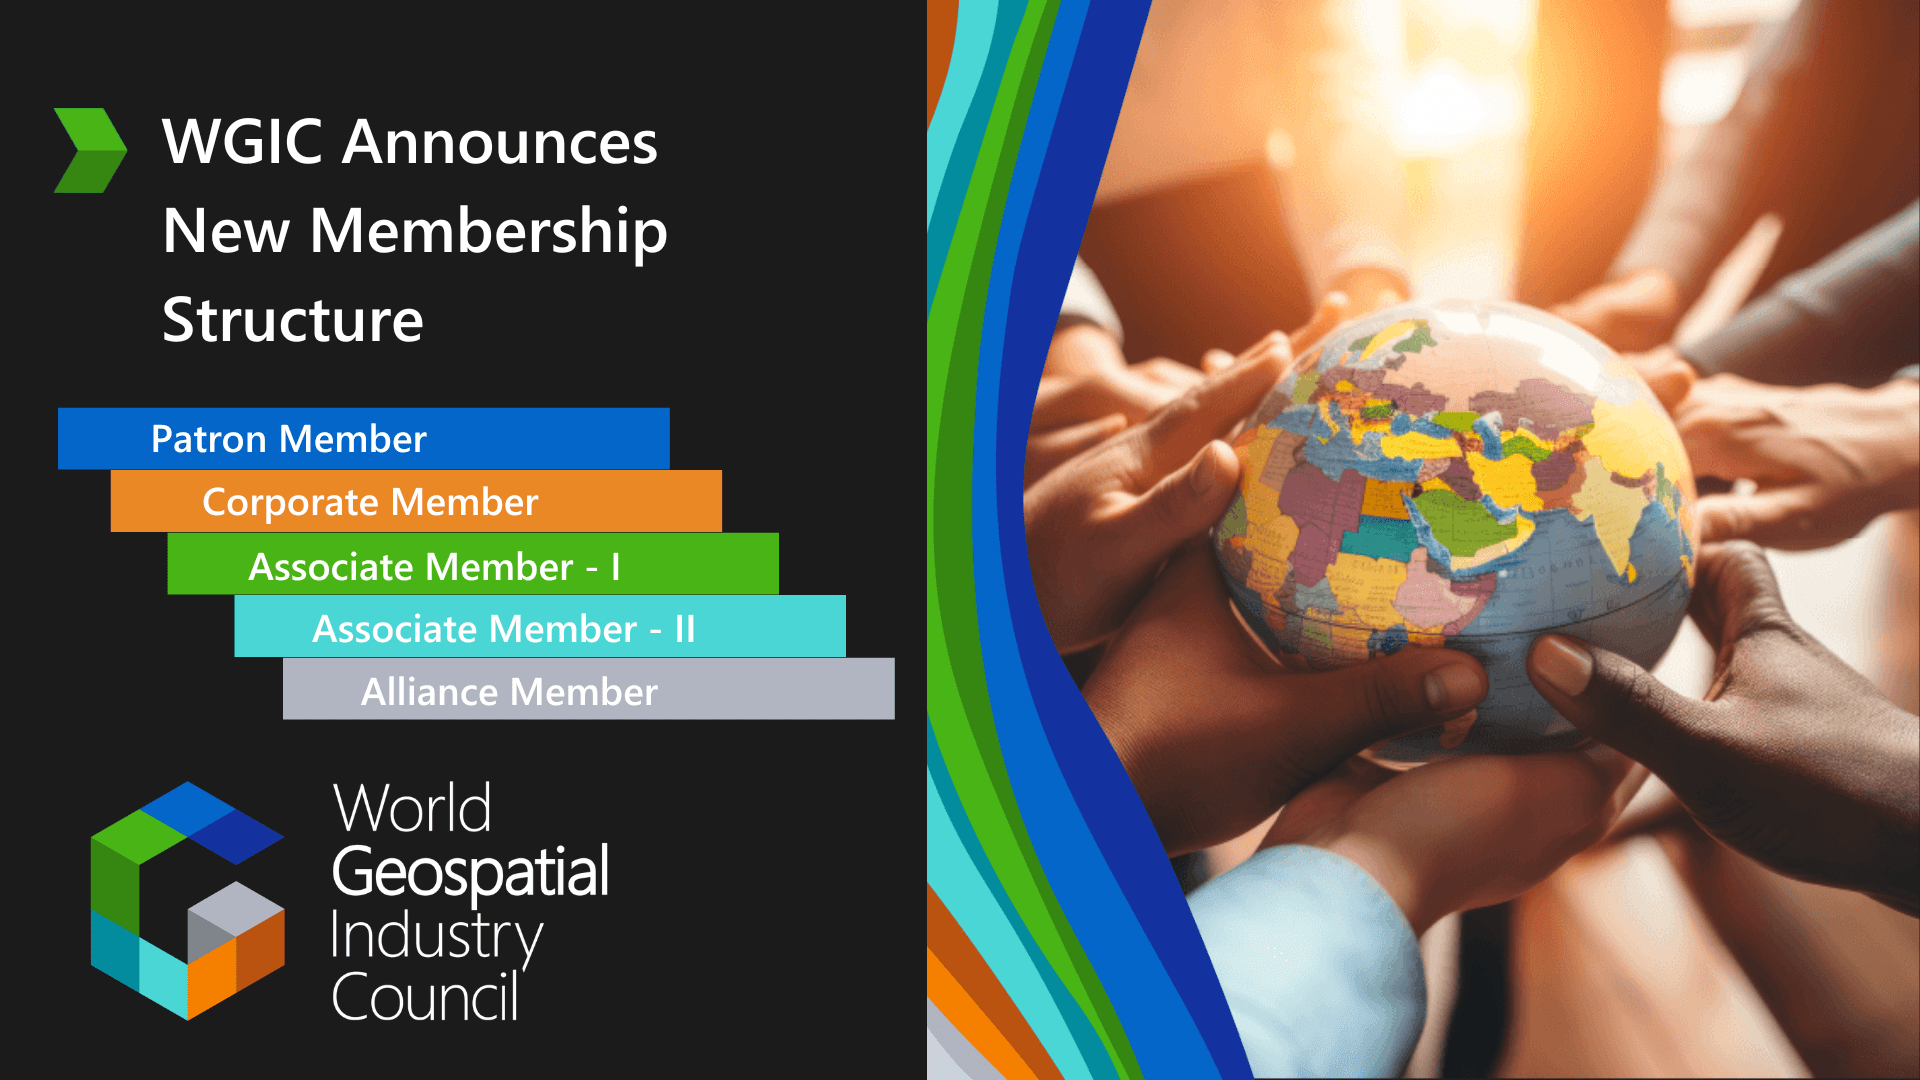 WGIC Announces New Membership Structure